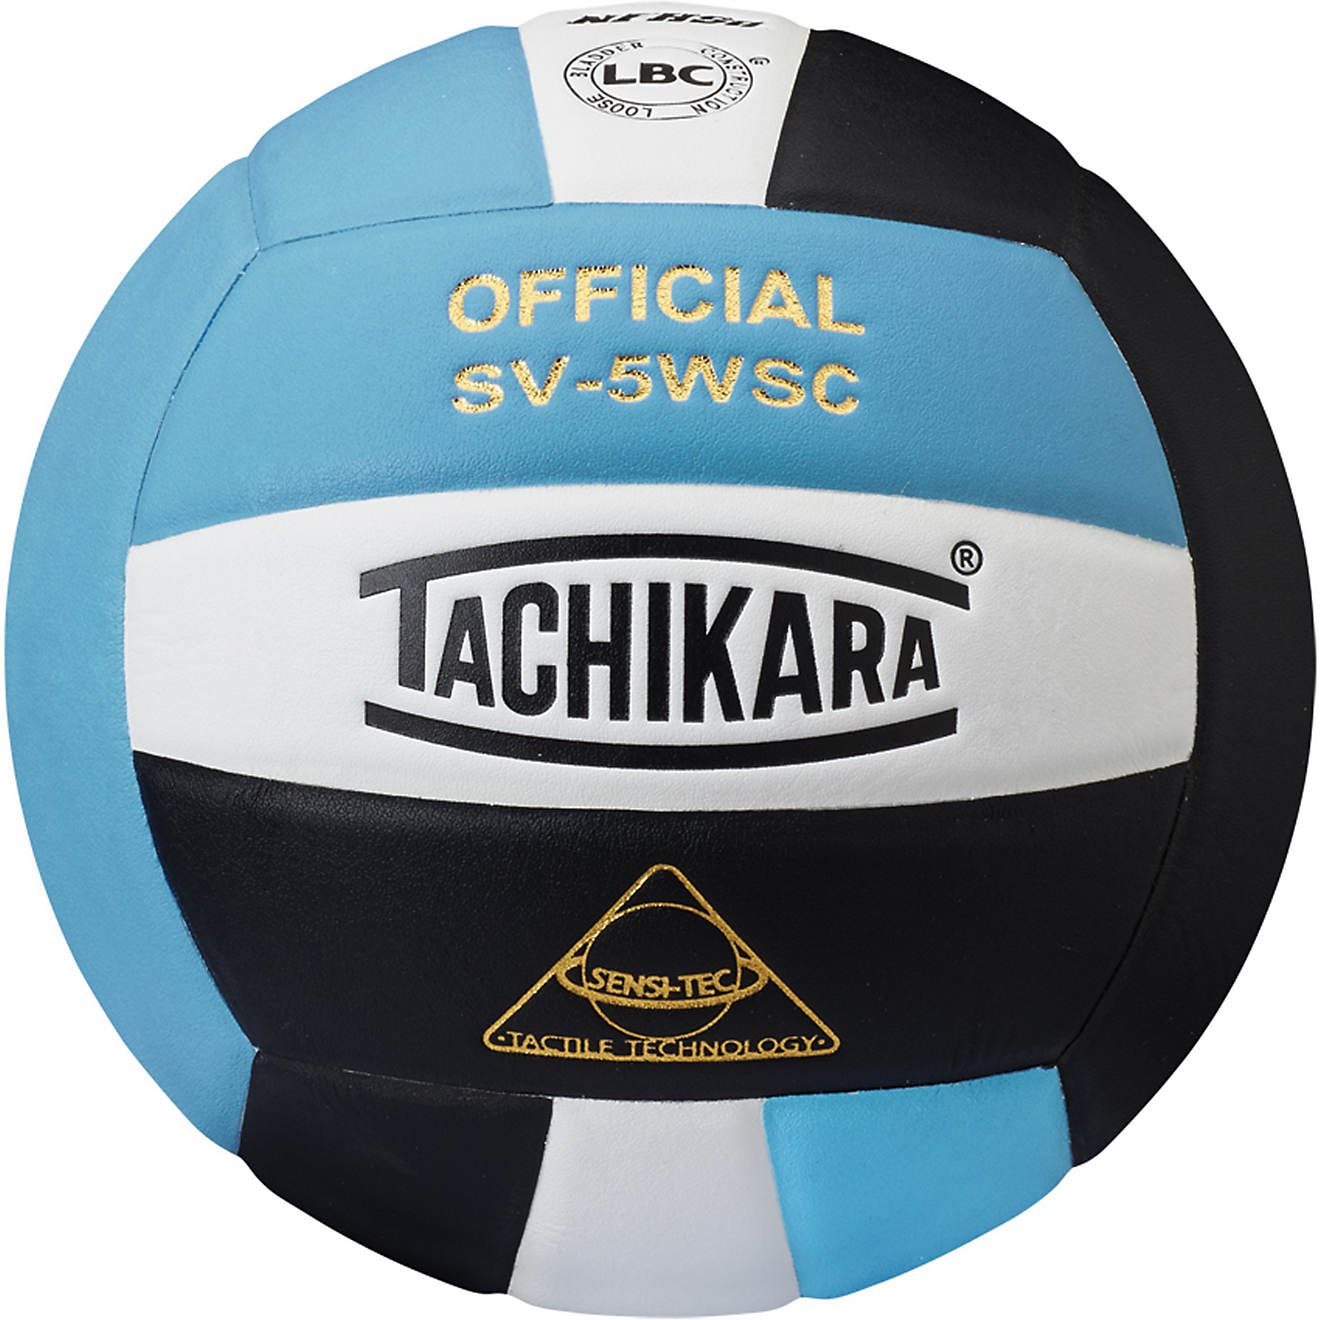 Tachikara® SV-5WS Volleyball | Academy Sports + Outdoors